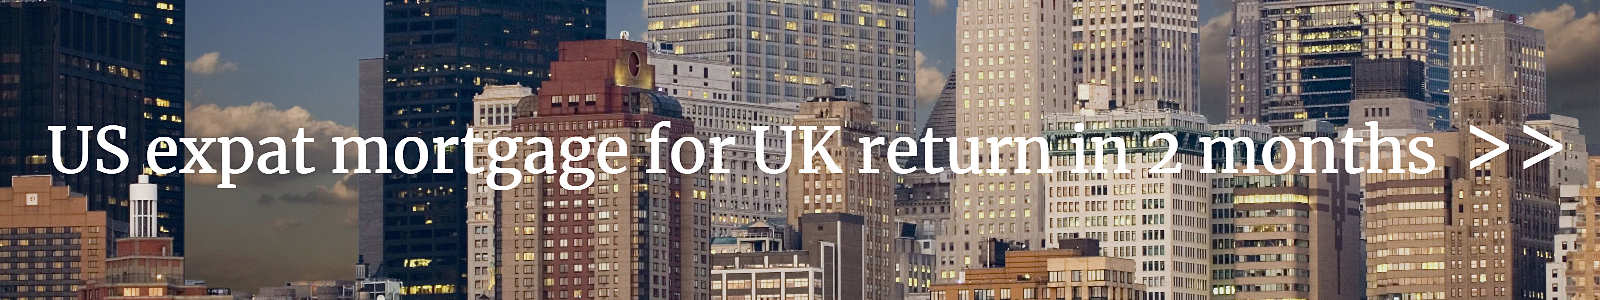 LINK for US expat mortgage for UK return in 2 months